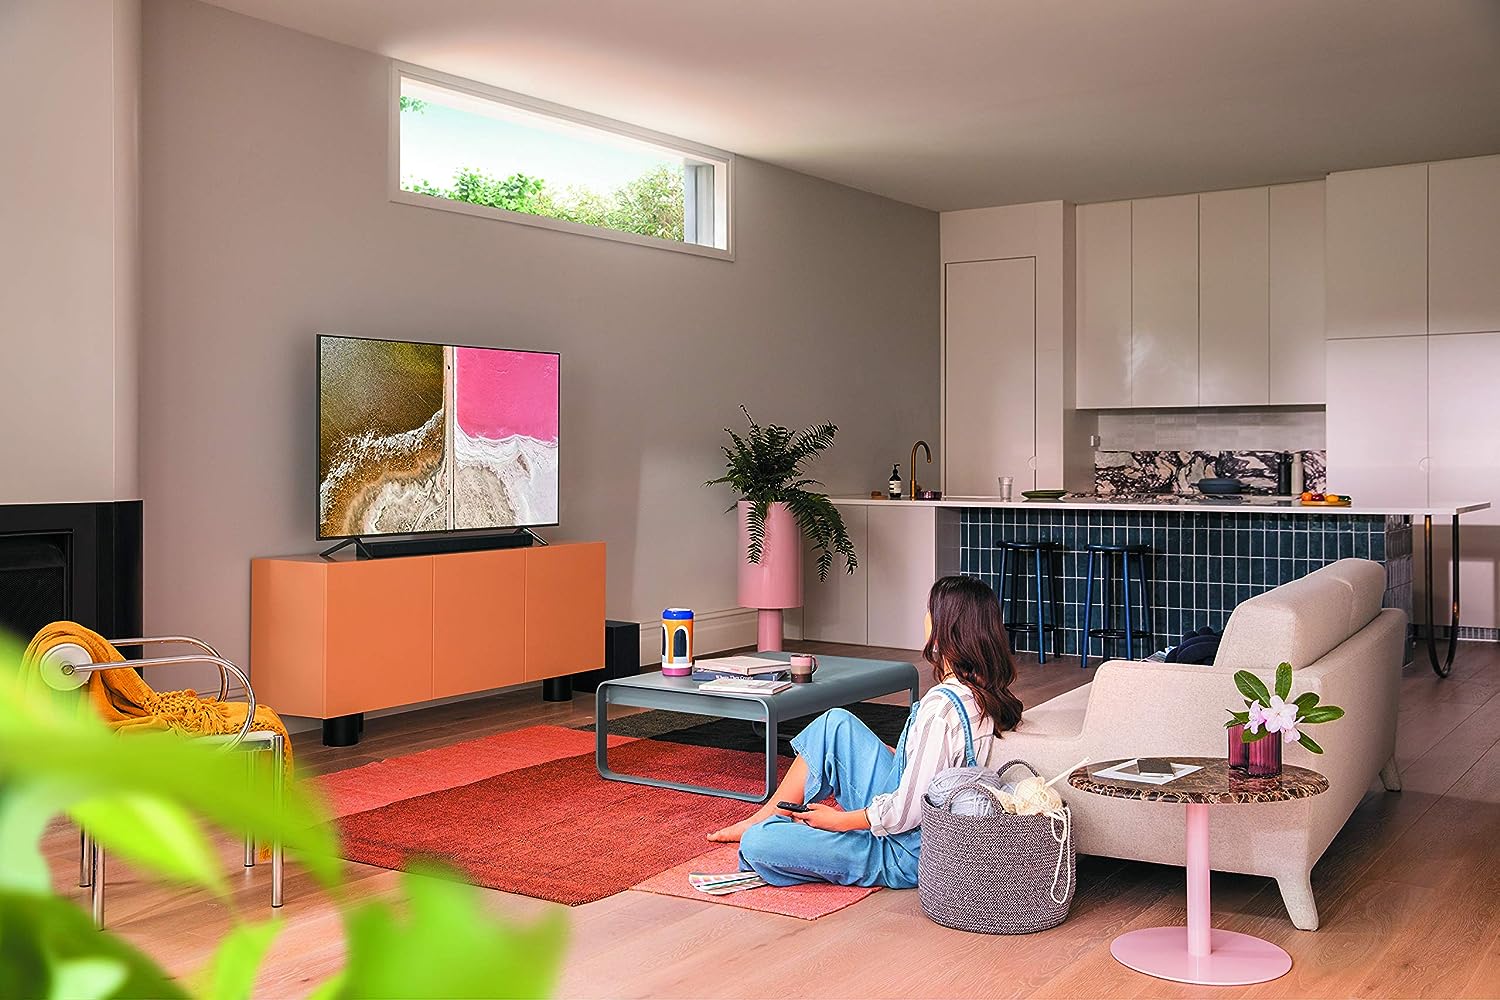 SAMSUNG 55-inch Class QLED Q60T Series - 4K UHD Dual LED Quantum HDR Smart TV with Alexa Built-in (QN55Q60TAFXZA, 2020 Model)